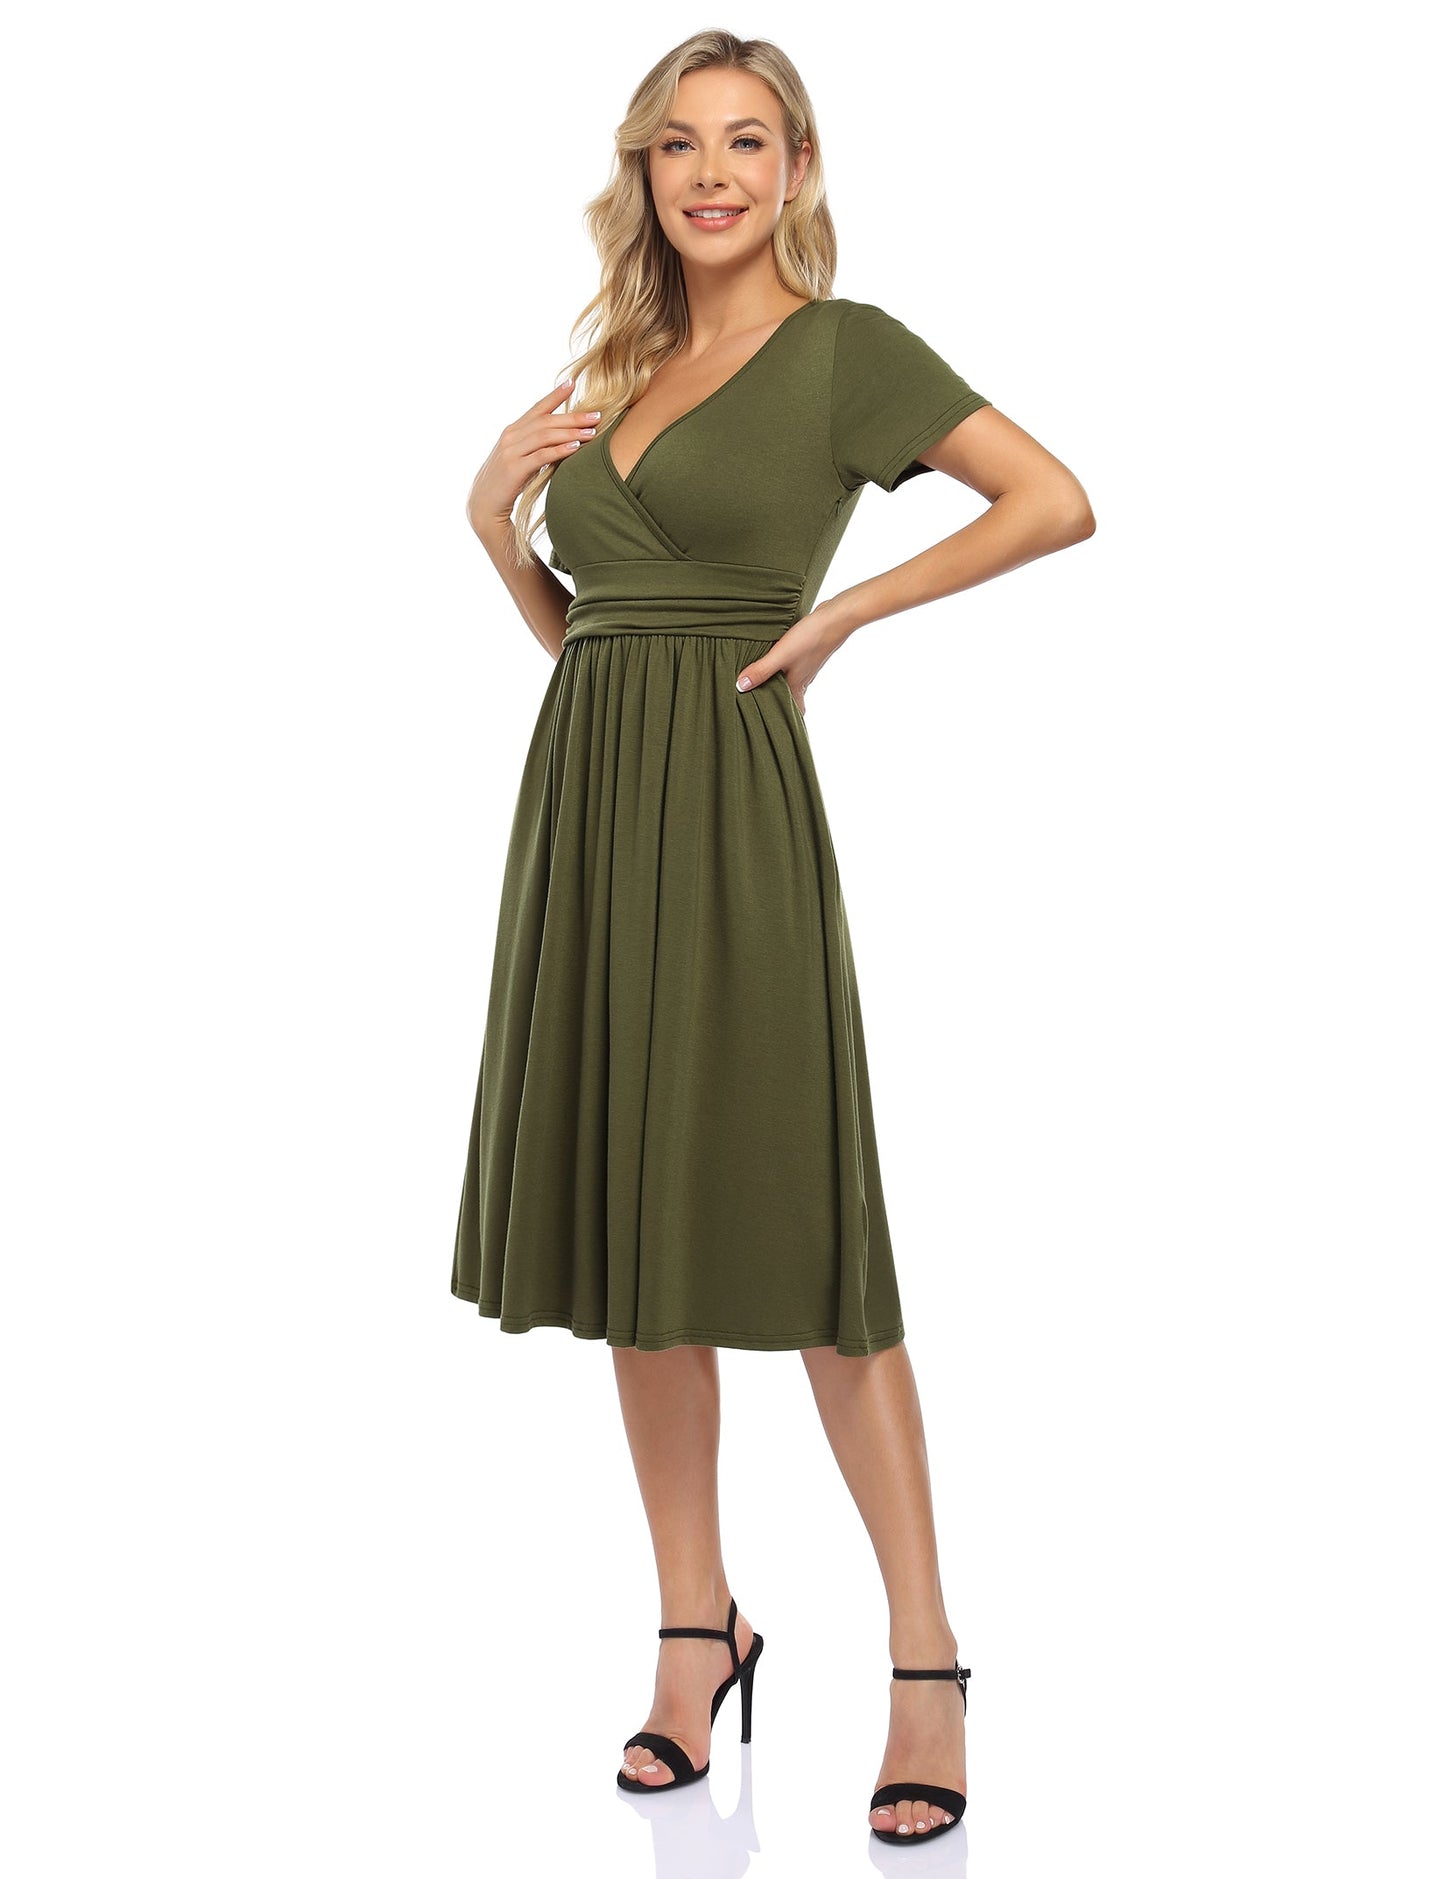 YESFASHION Women's V-neck Casual Dress Green